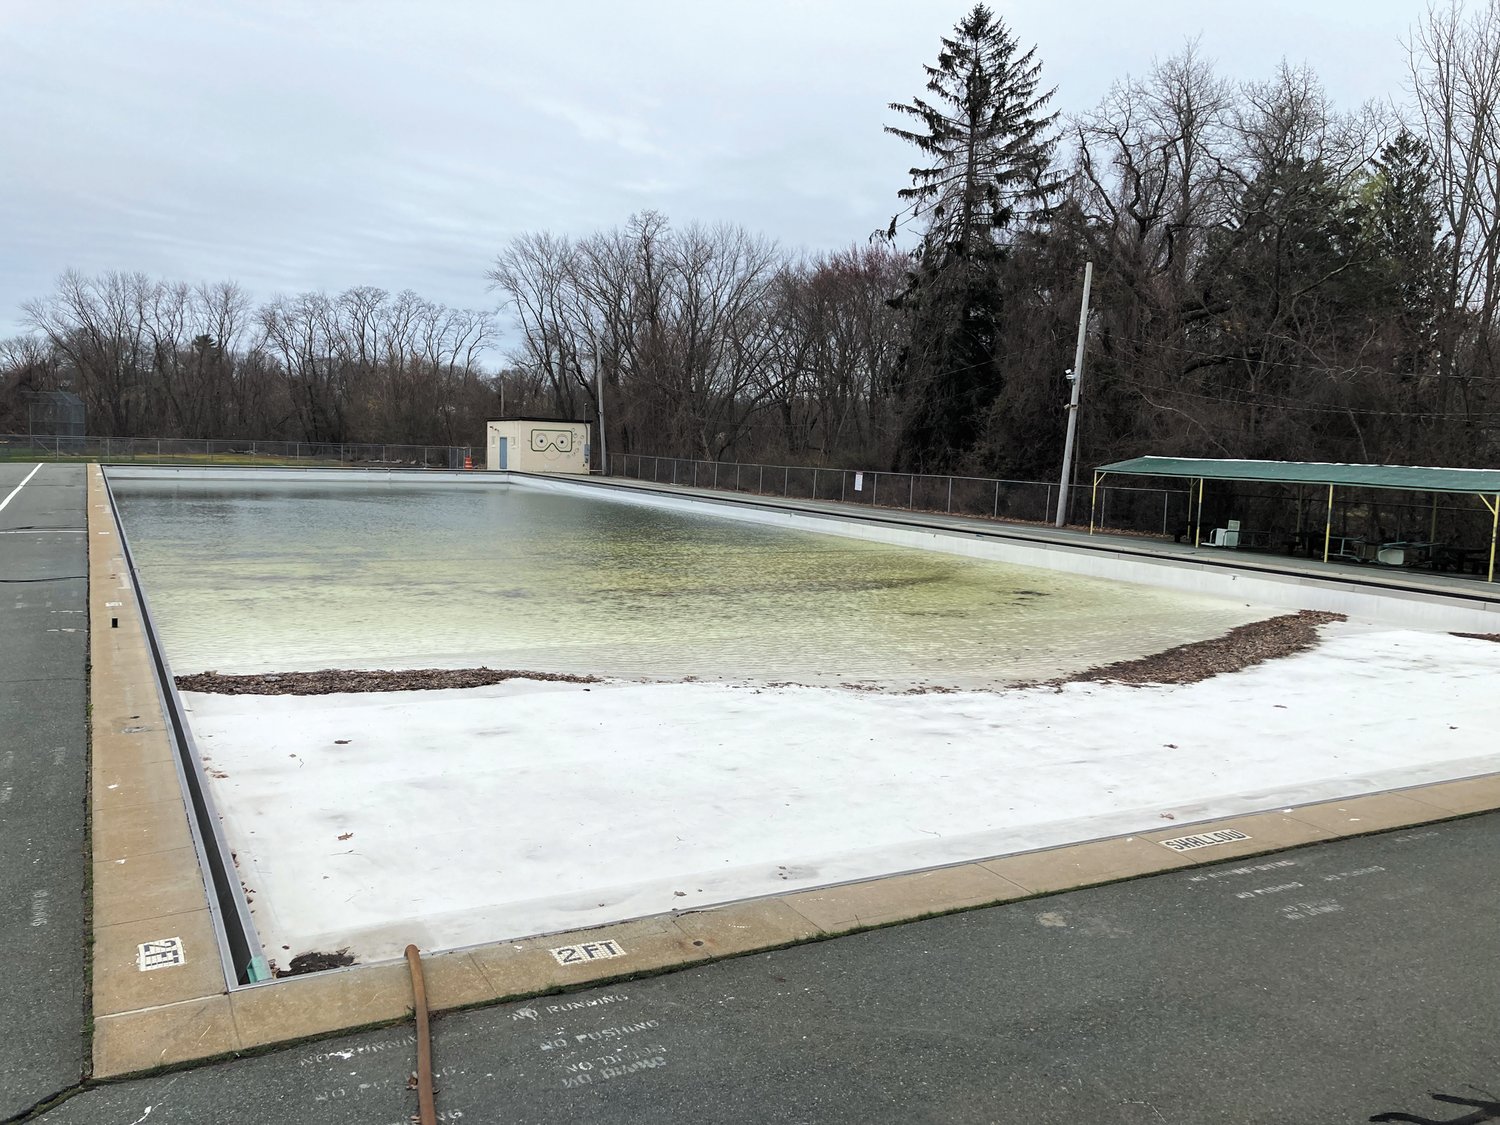 Budlong pool too big, Hopkins plans revisions Warwick Beacon